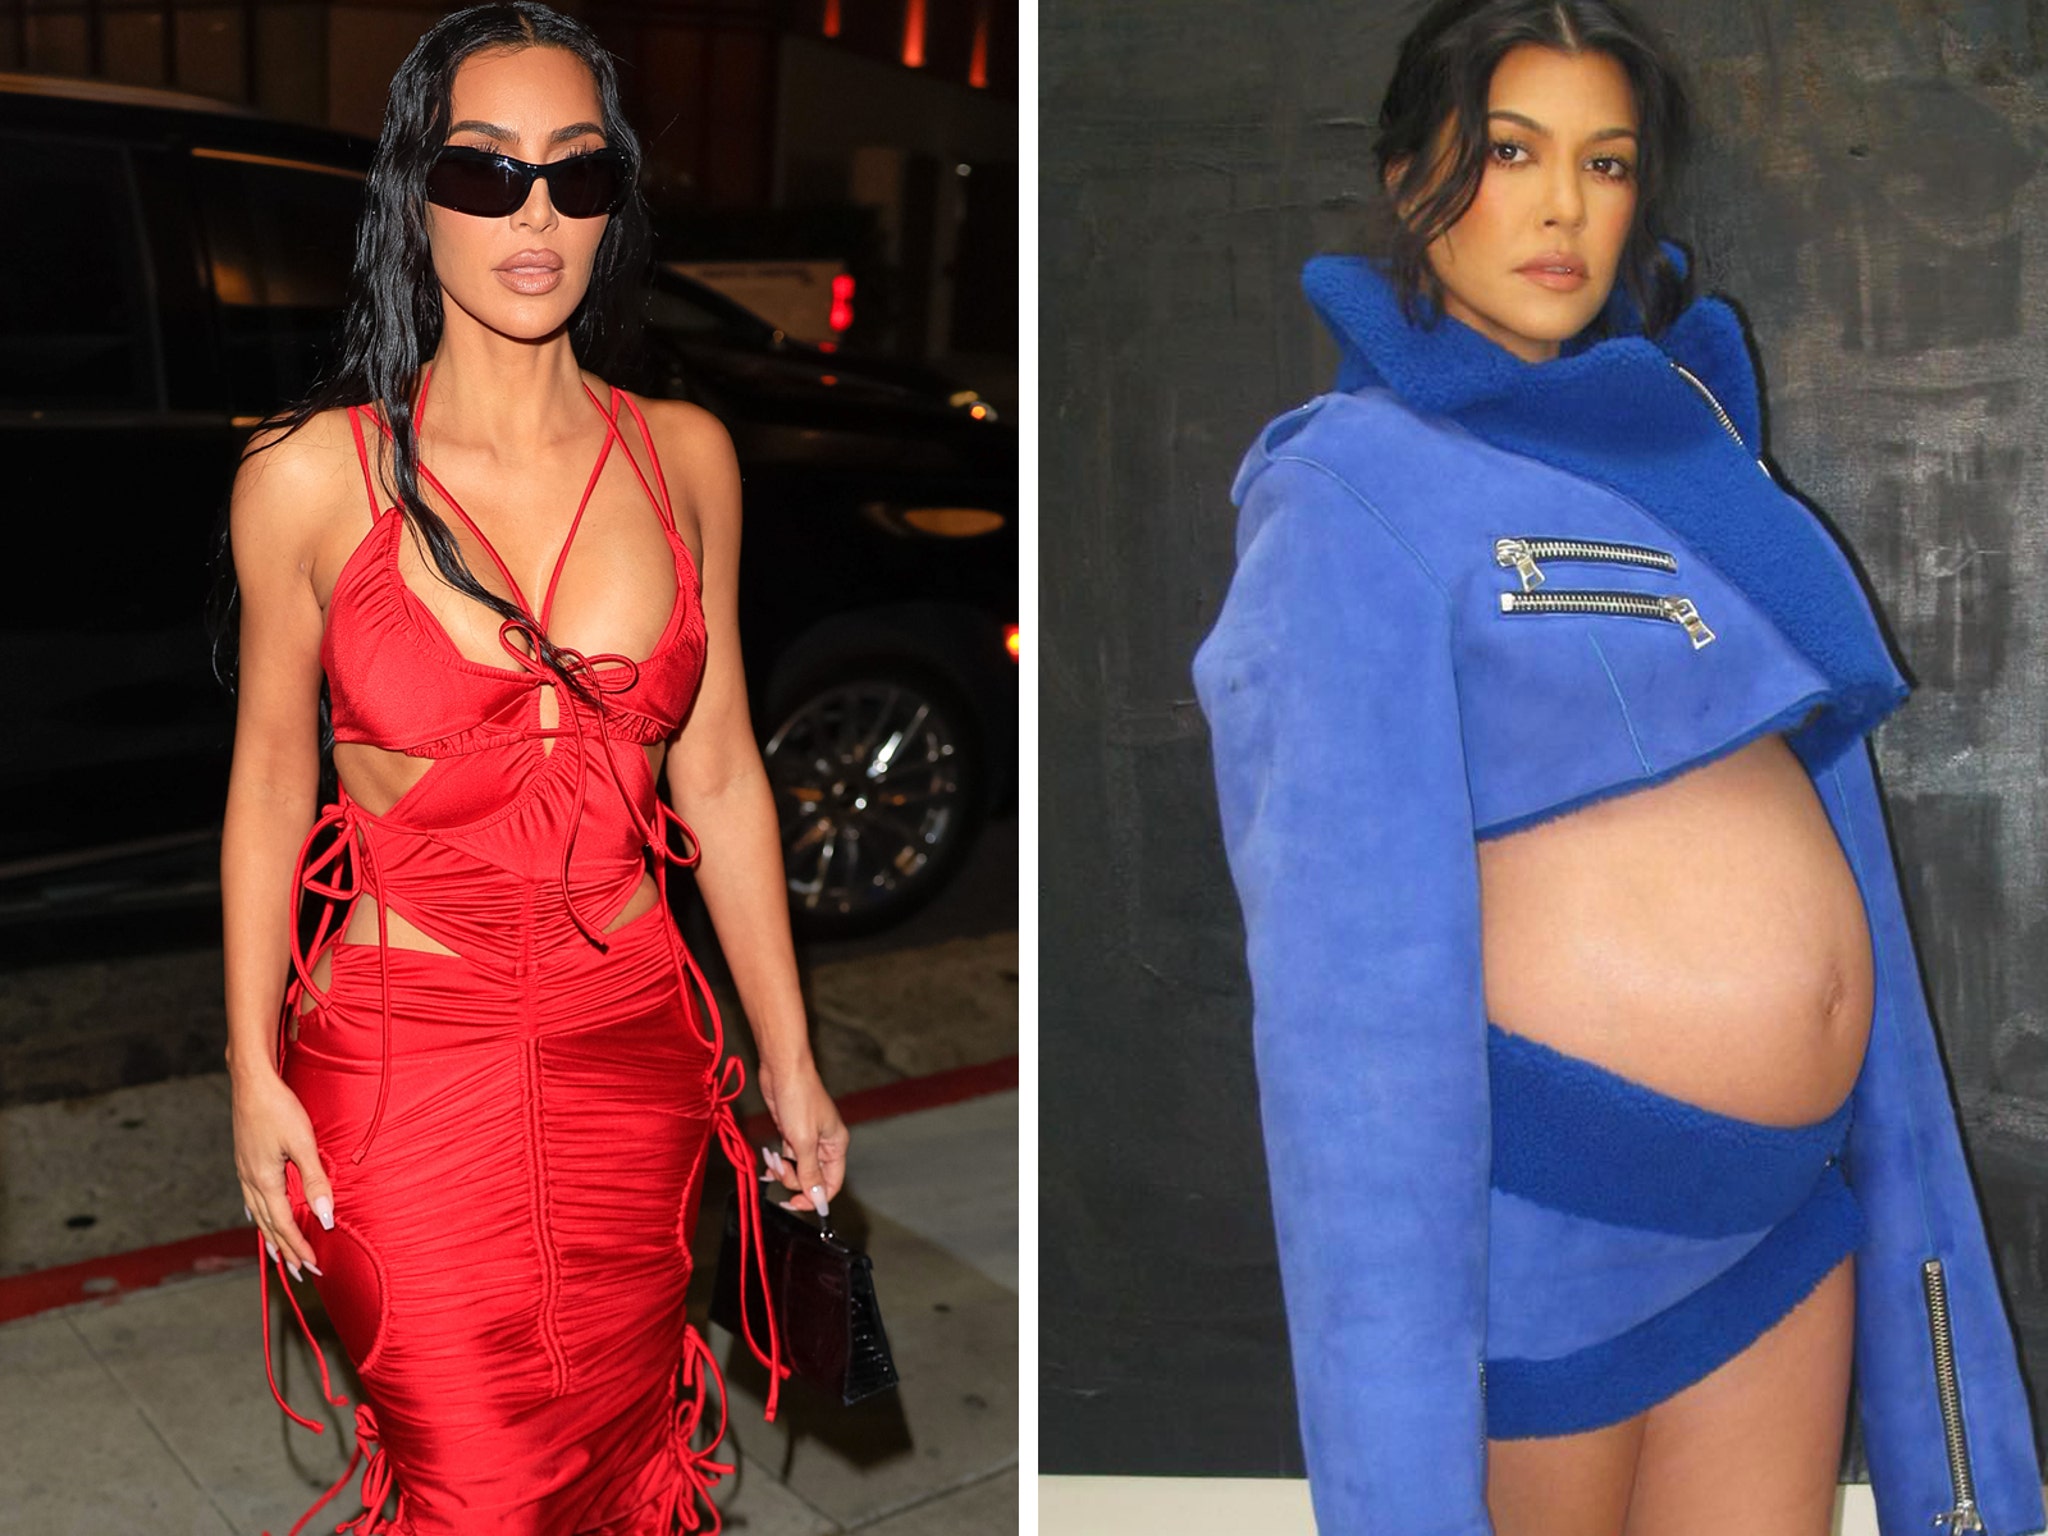 Kim Kardashian Reveals Pregnant Kourtney Kardashian Is on 'Bed Rest